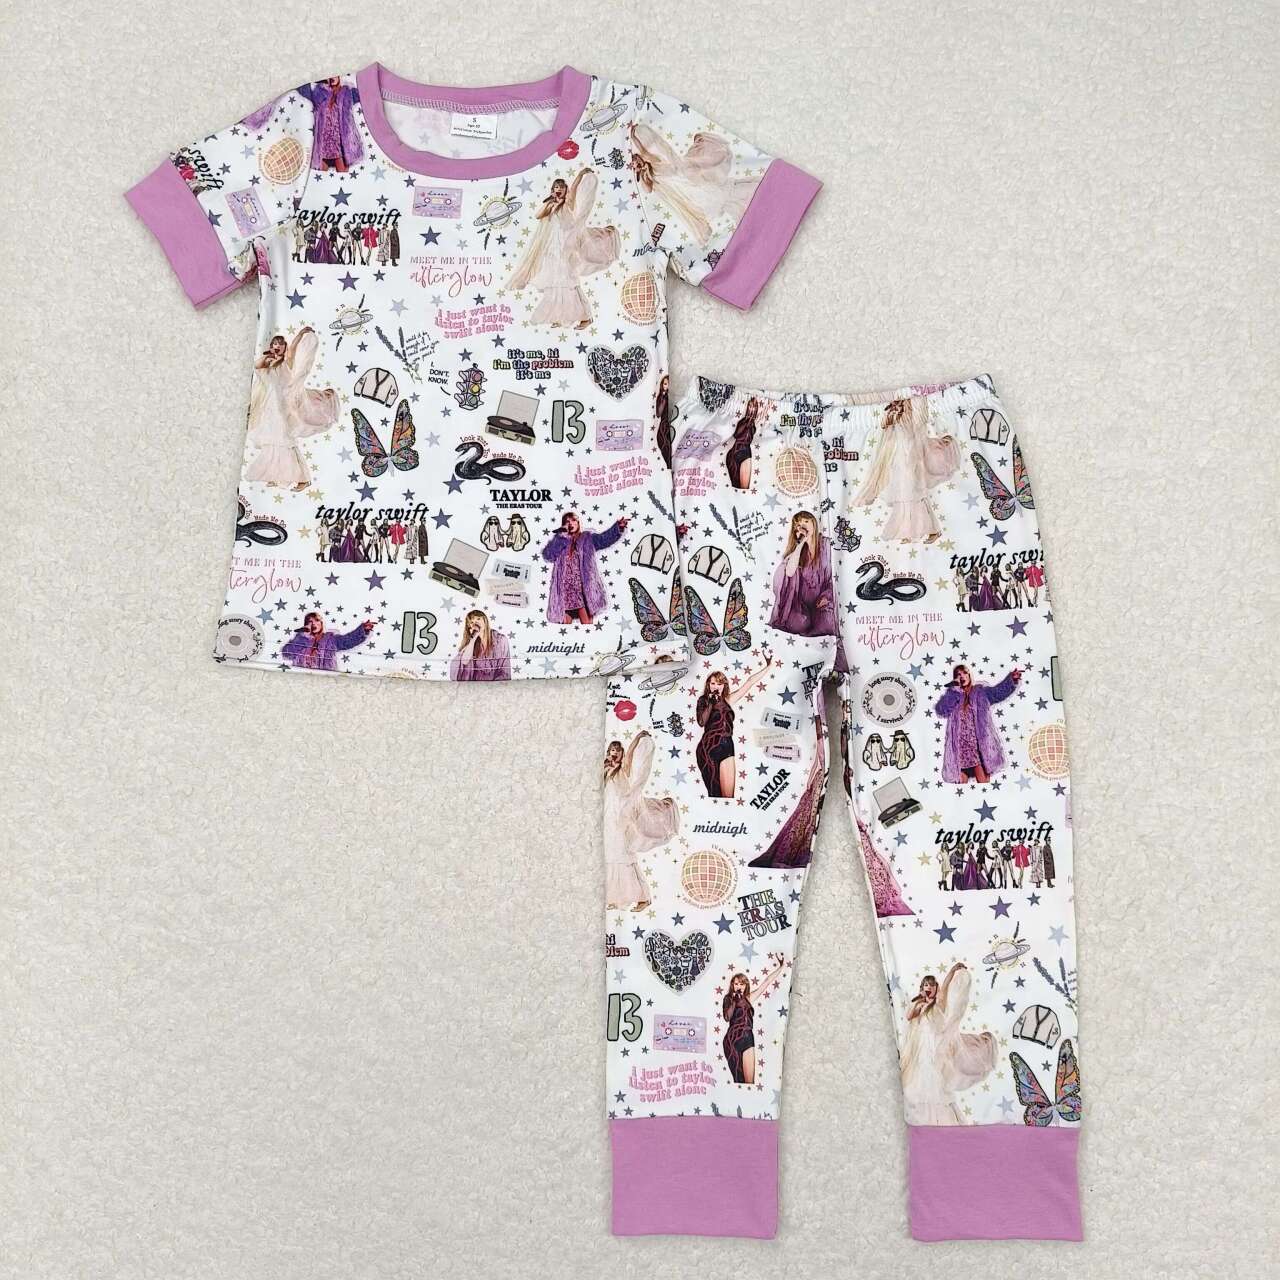 GSPO1414 Singer Swiftie Print Girls Pajamas Clothes Set